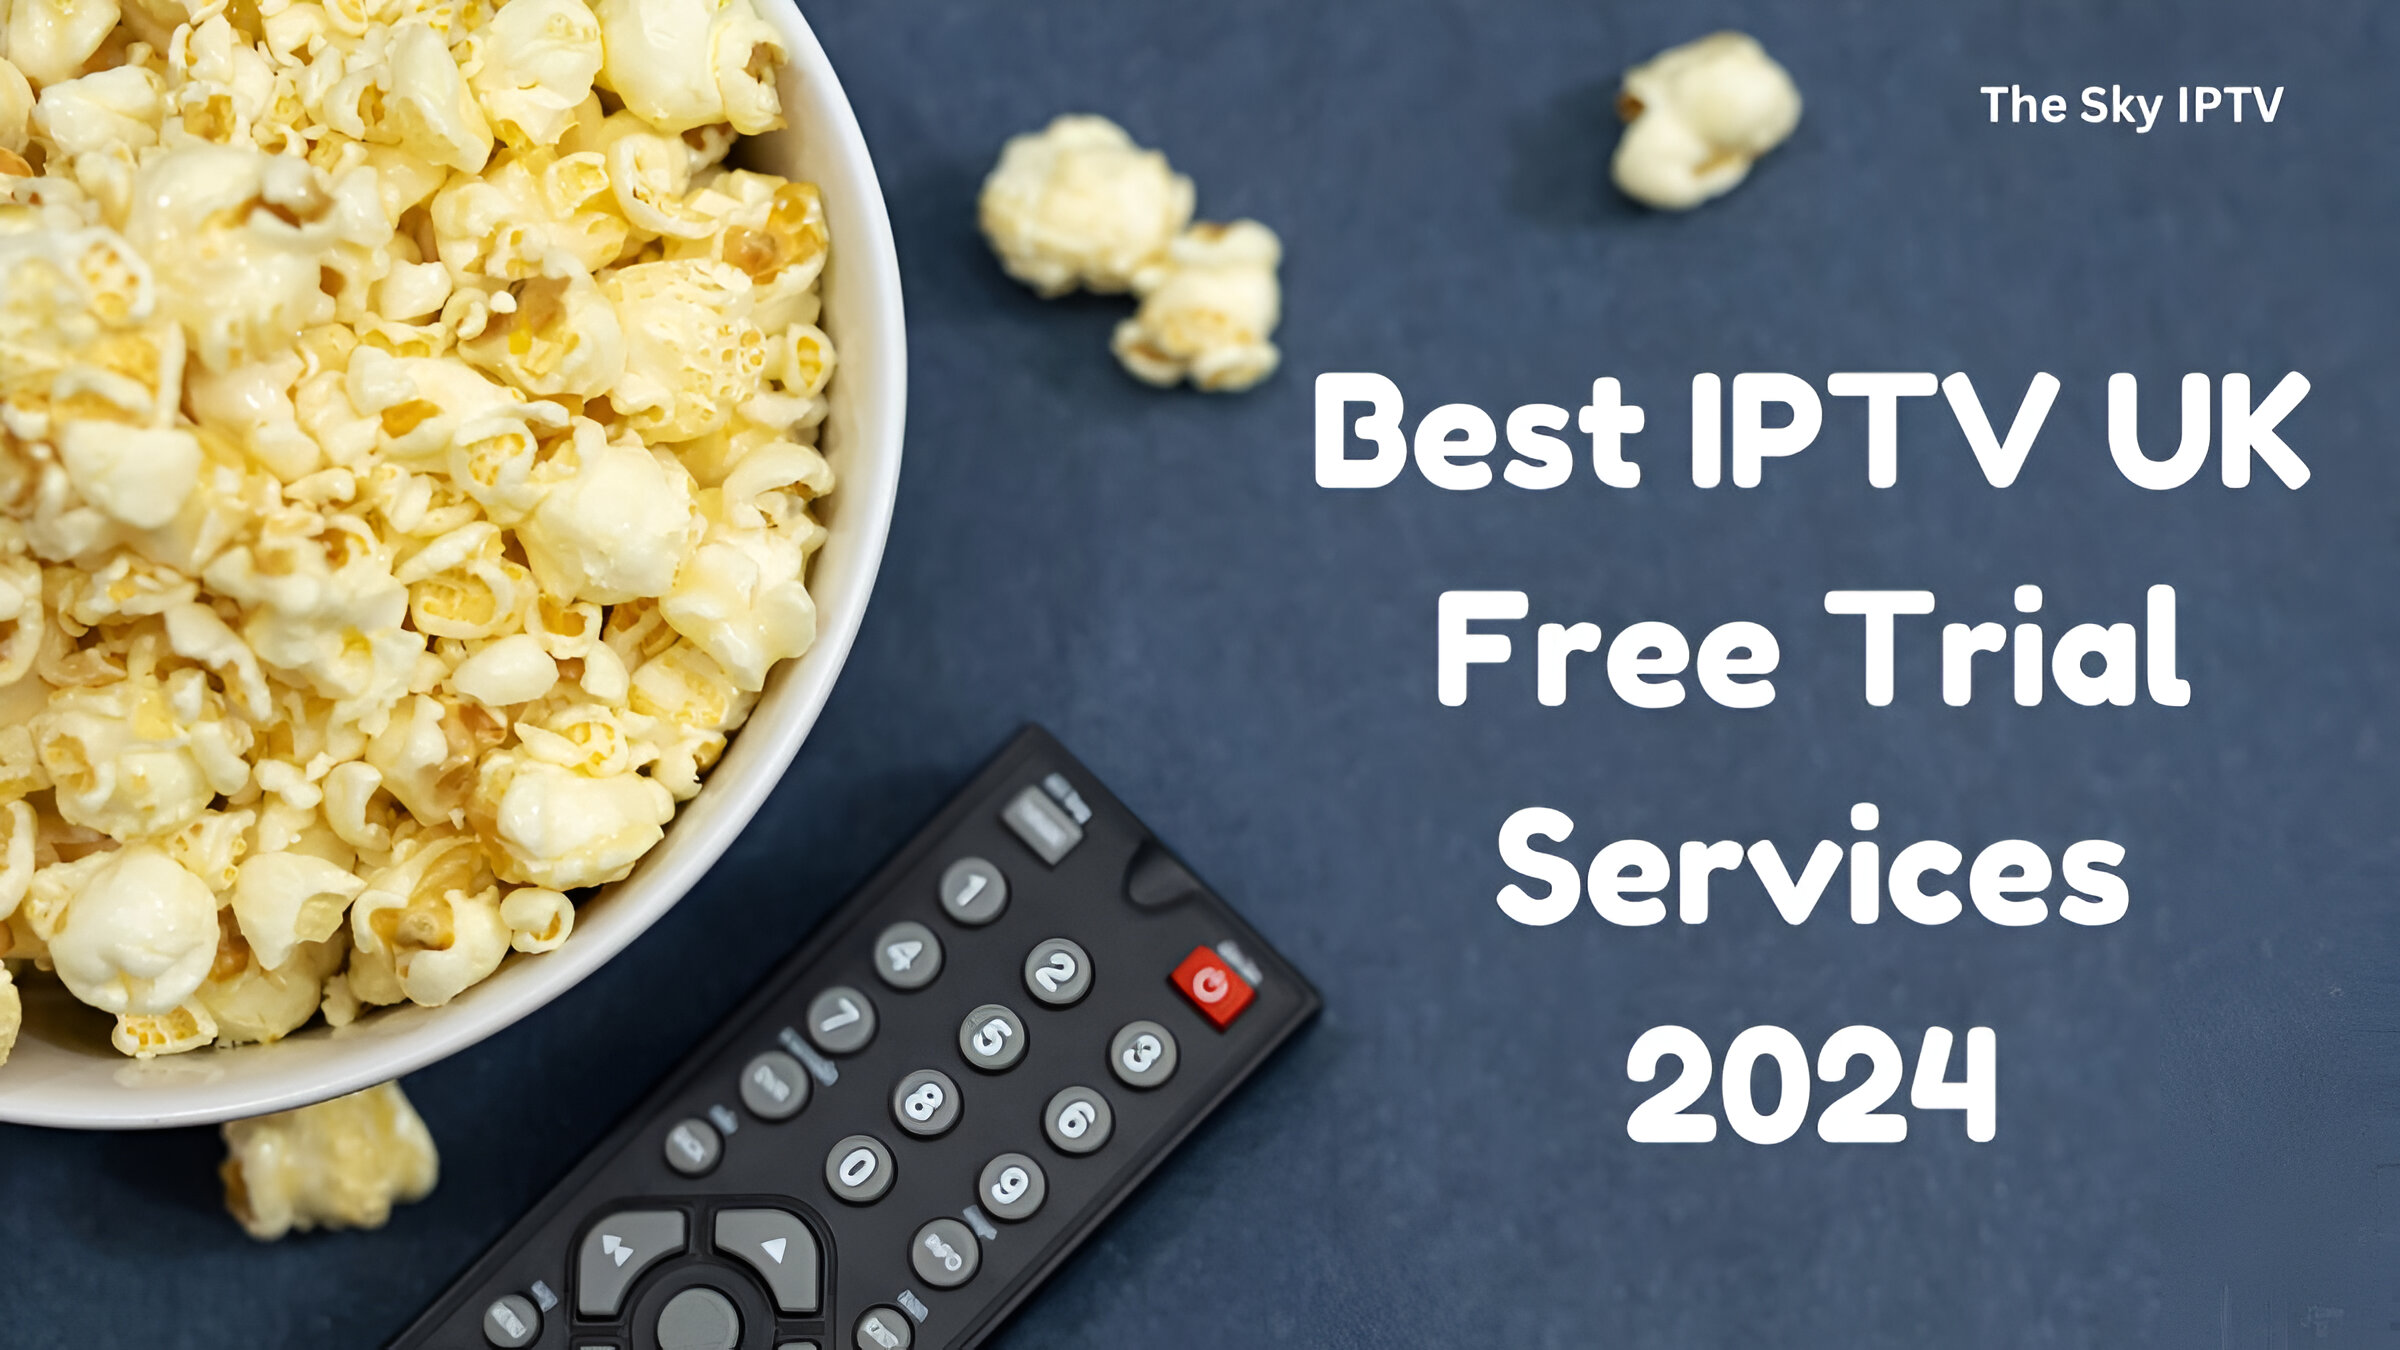 IPTV UK Free Trial Services